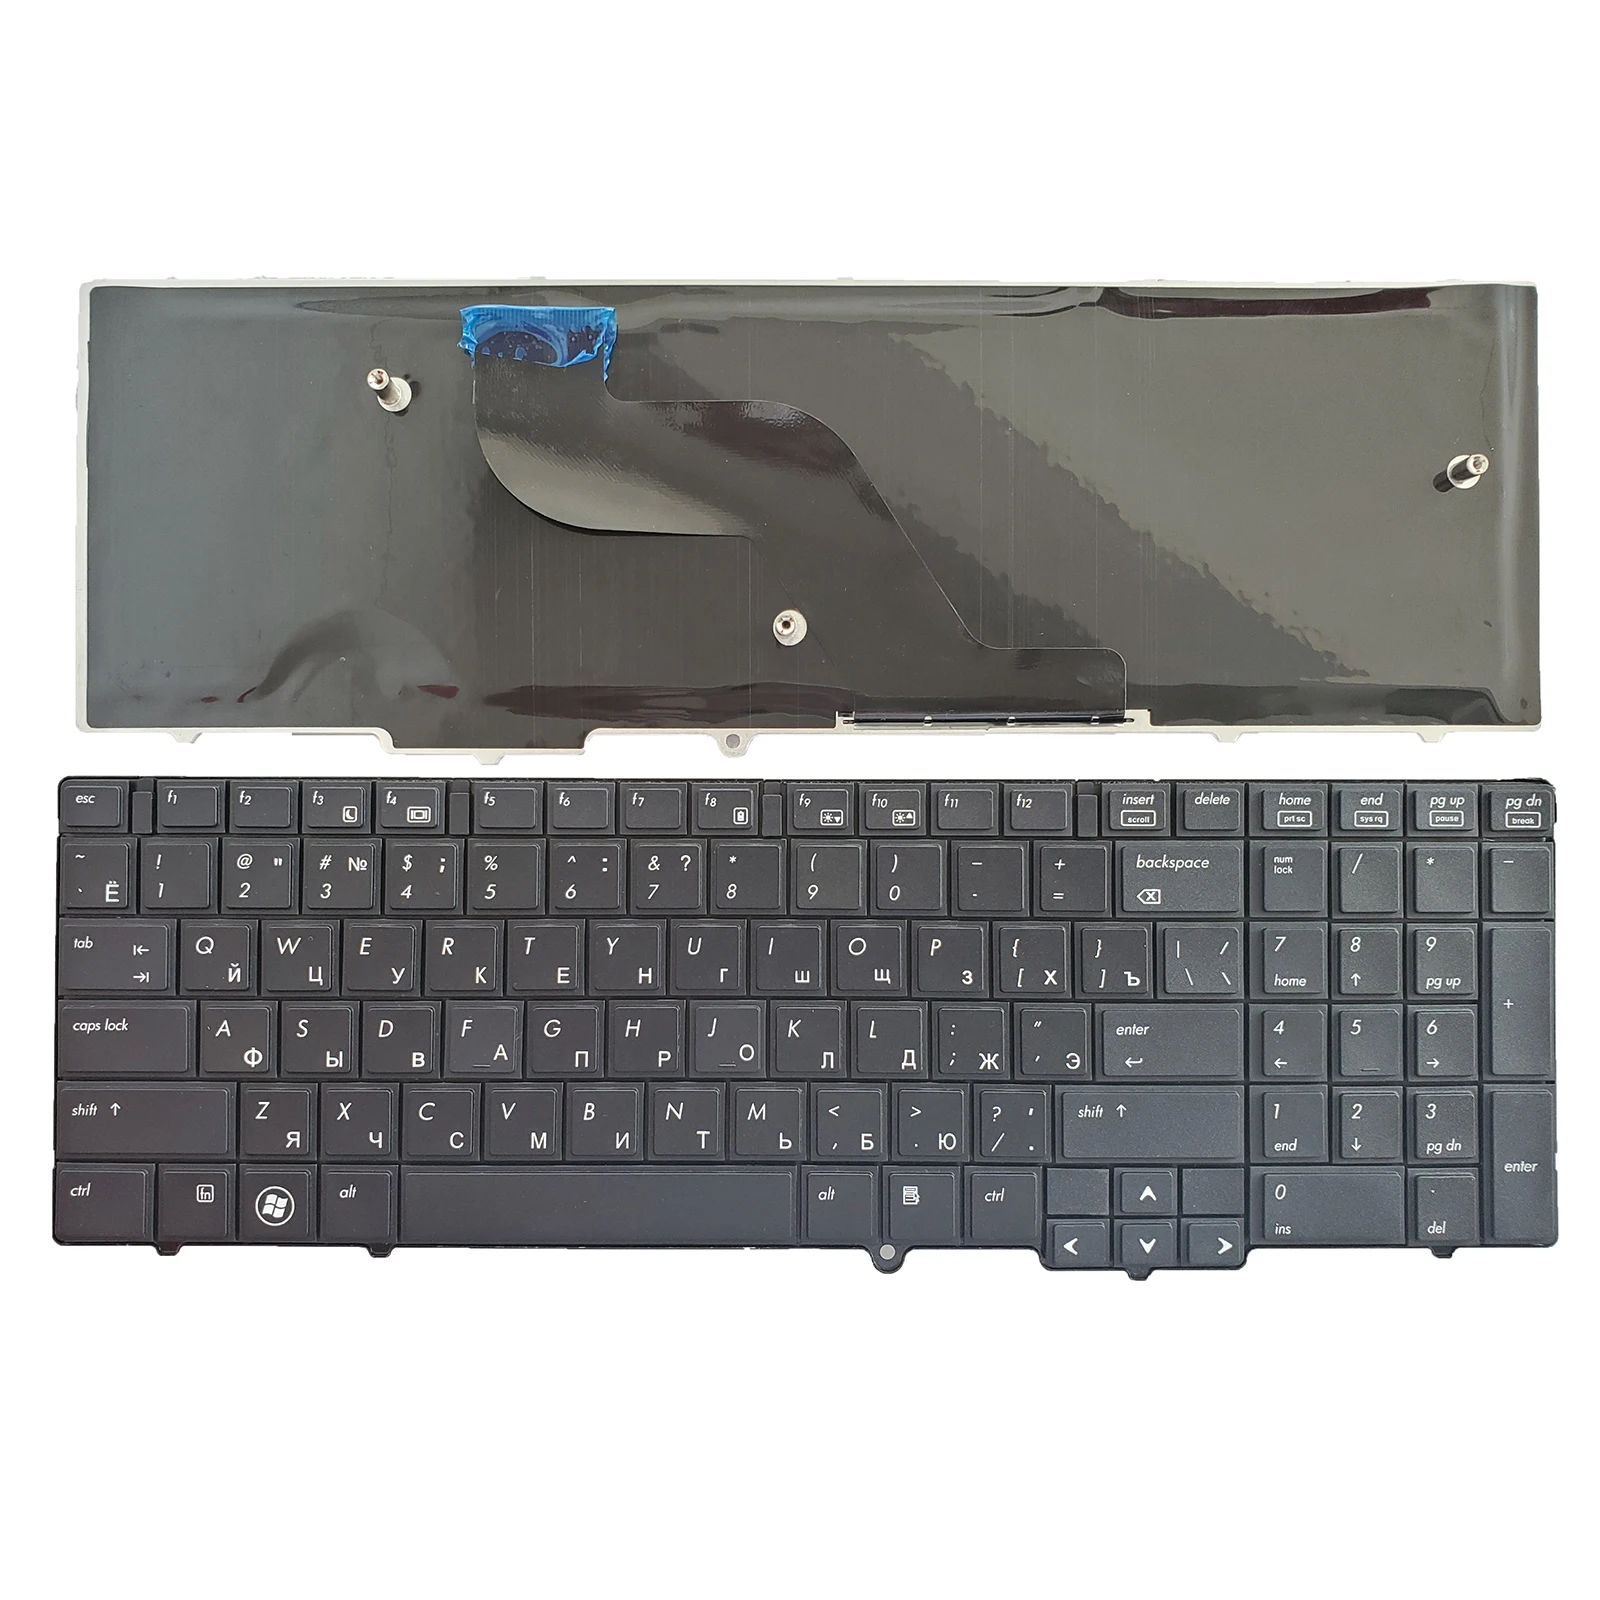 

Shen Zhen горячая Распродажа Новая клавиатура для ноутбука HP Probook 6540B 6545B 6550B 6555b RU, клавиатура без указателя